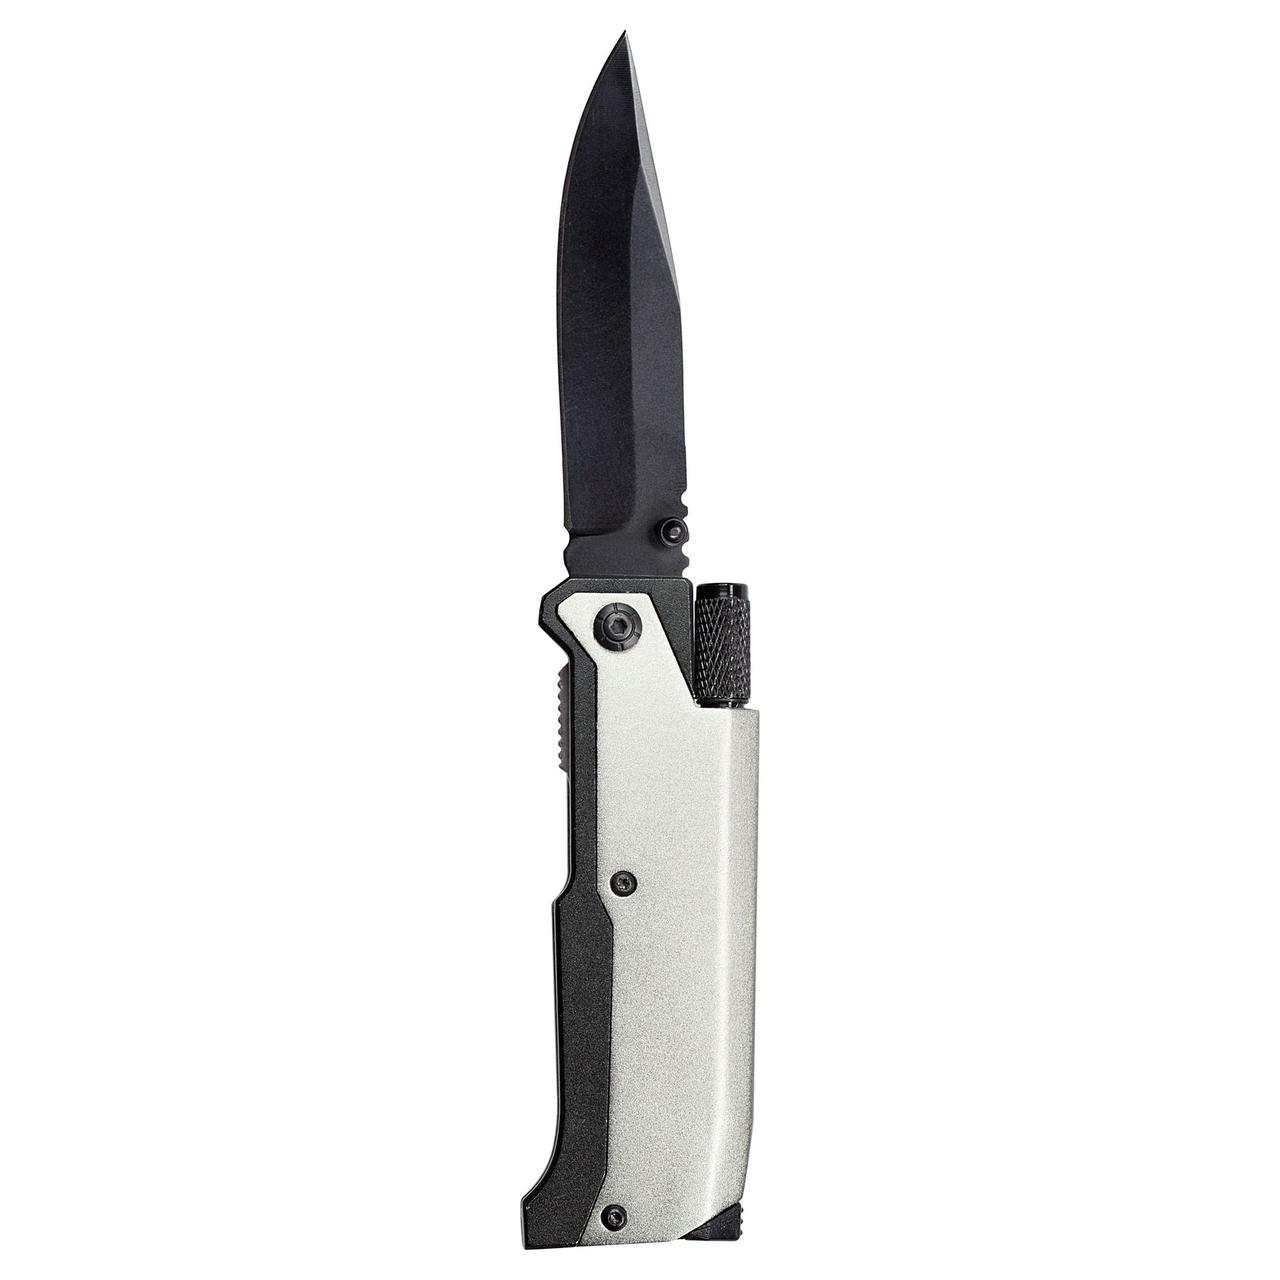 Нож складной с фонариком и огнивом Ster, серый (артикул 2803.10)